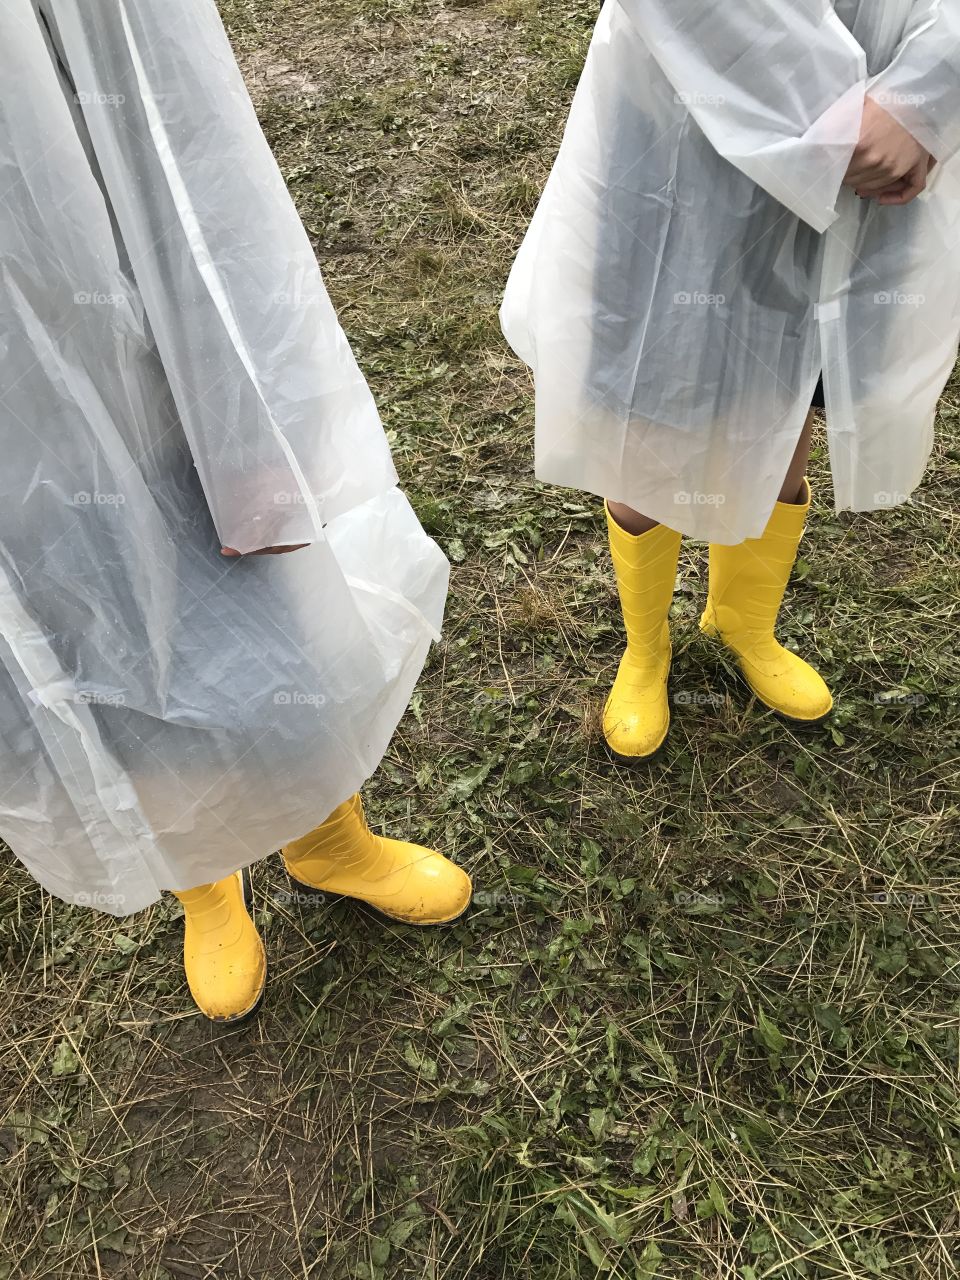 Raincoat, yellow boots